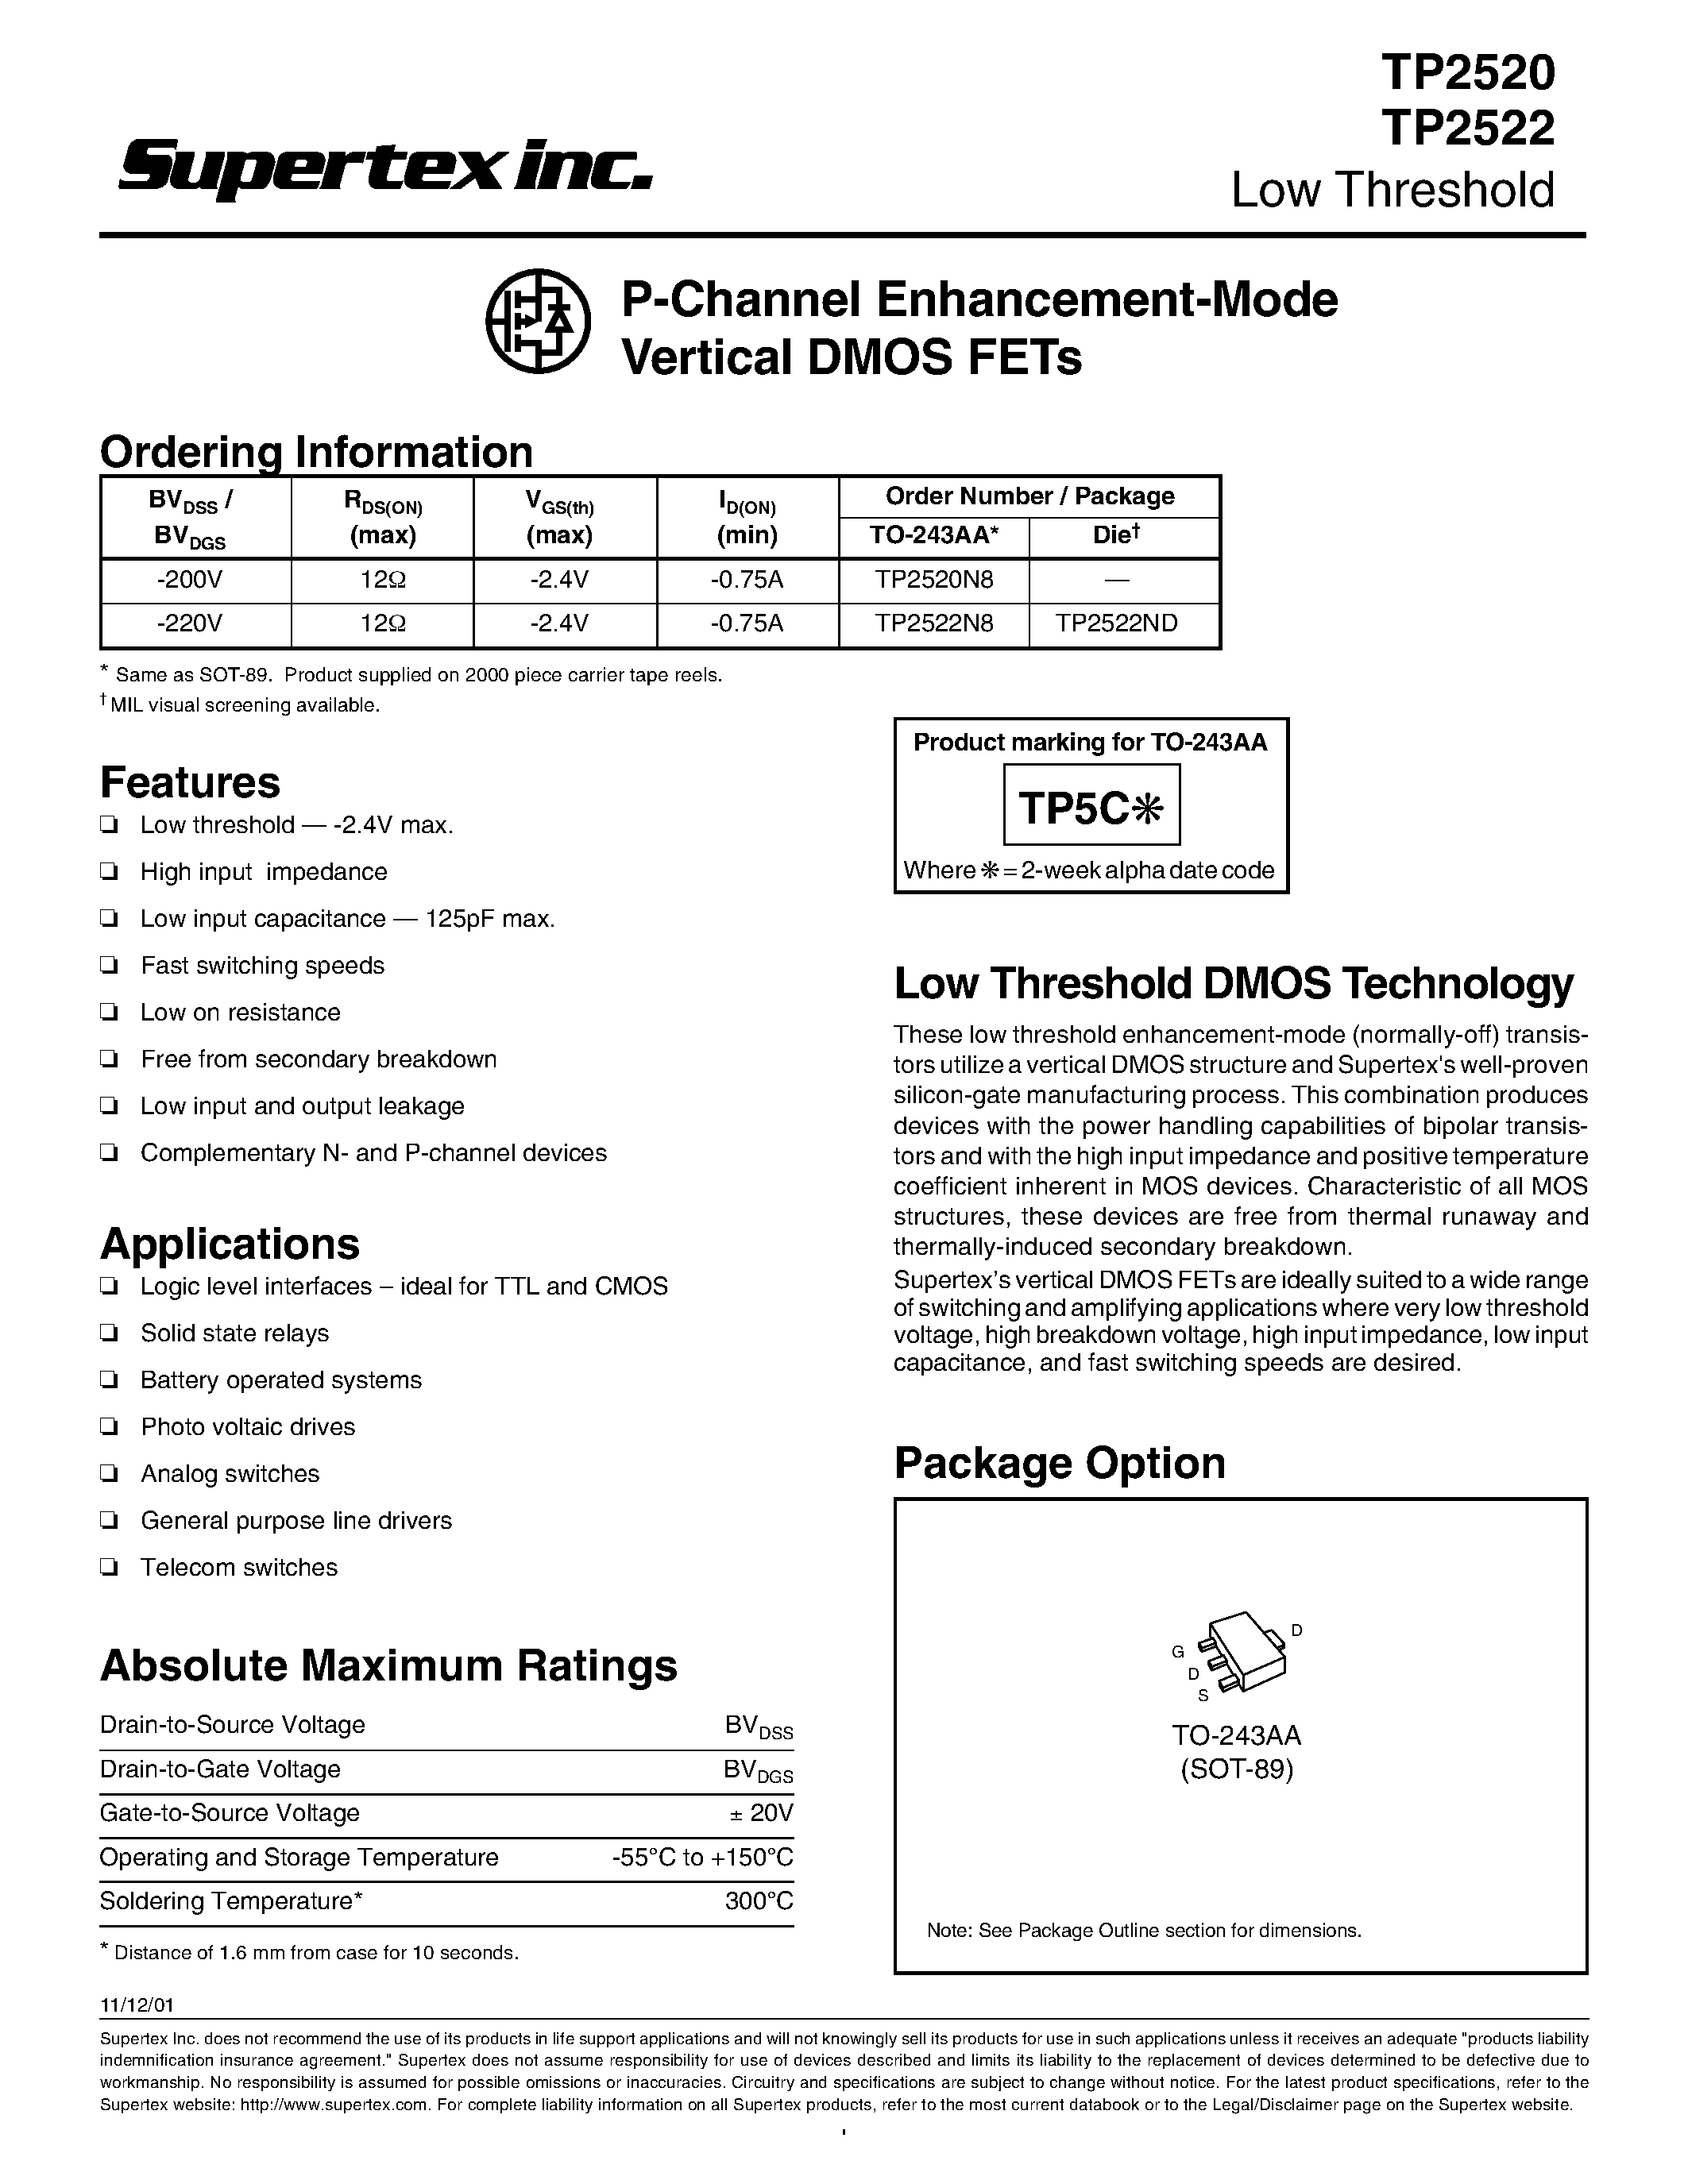 Datasheet TP2520N8 - P-Channel Enhancement-Mode Vertical DMOS FETs page 1